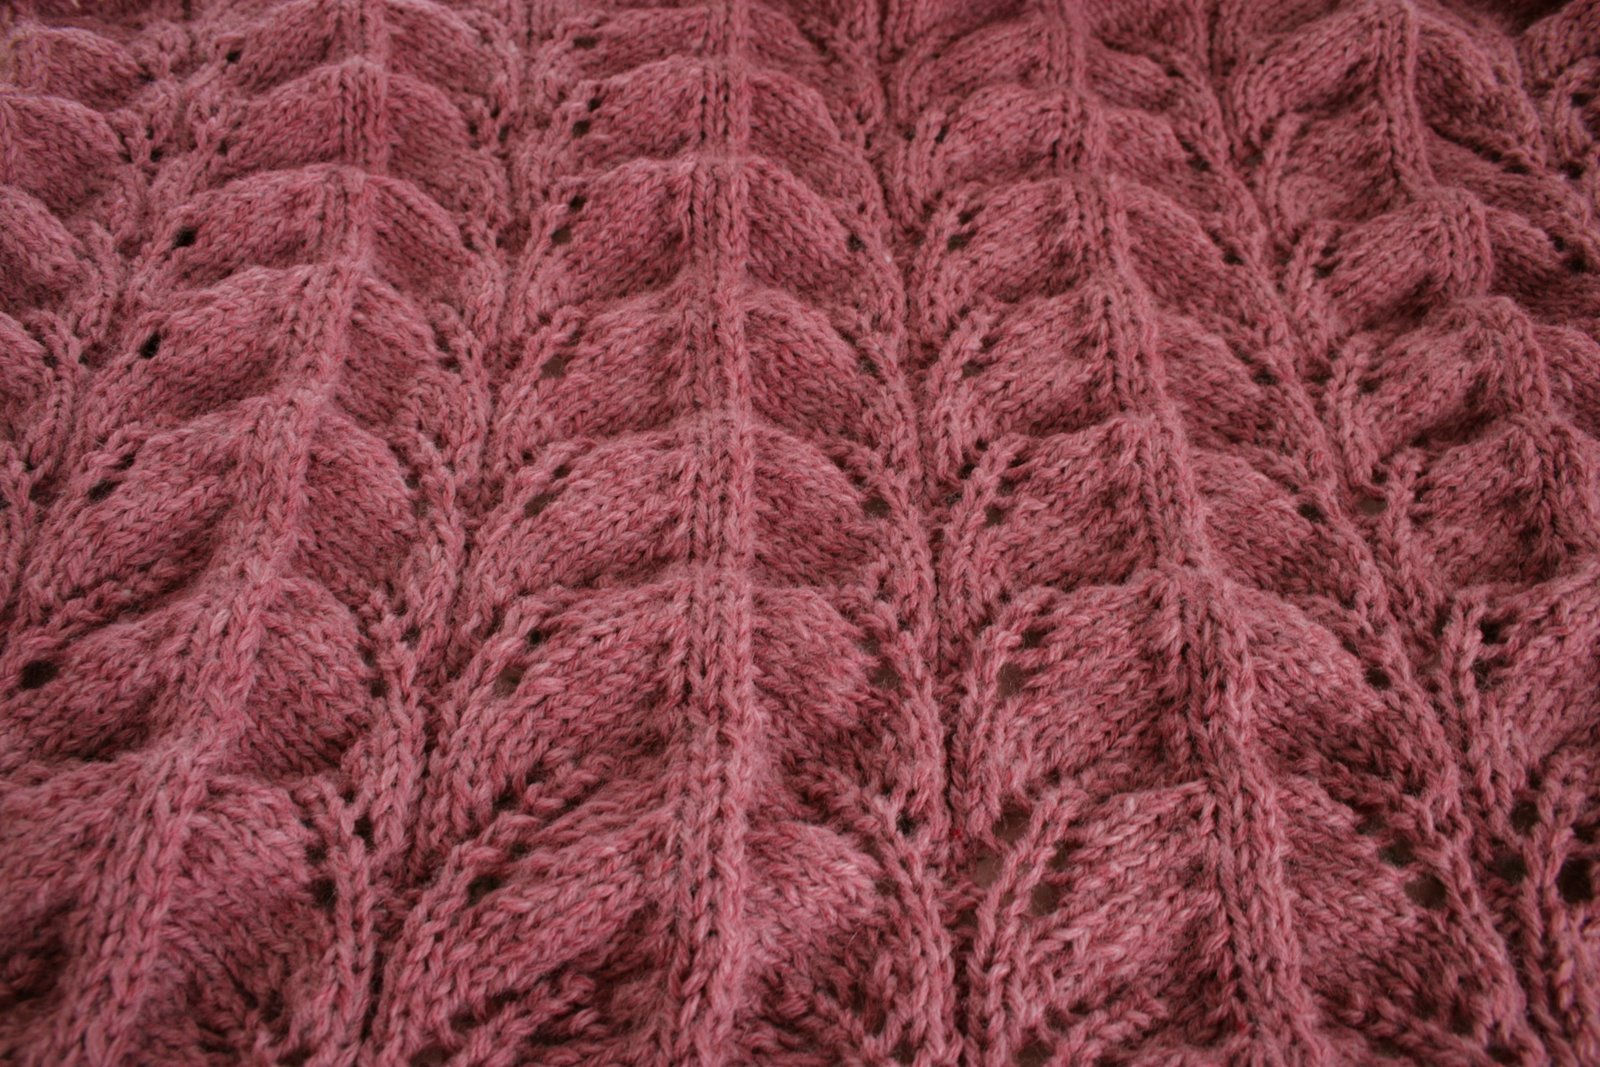 Pattern Central Knitting Work In Progress Fern Leaf Blanket The Craft Floozy